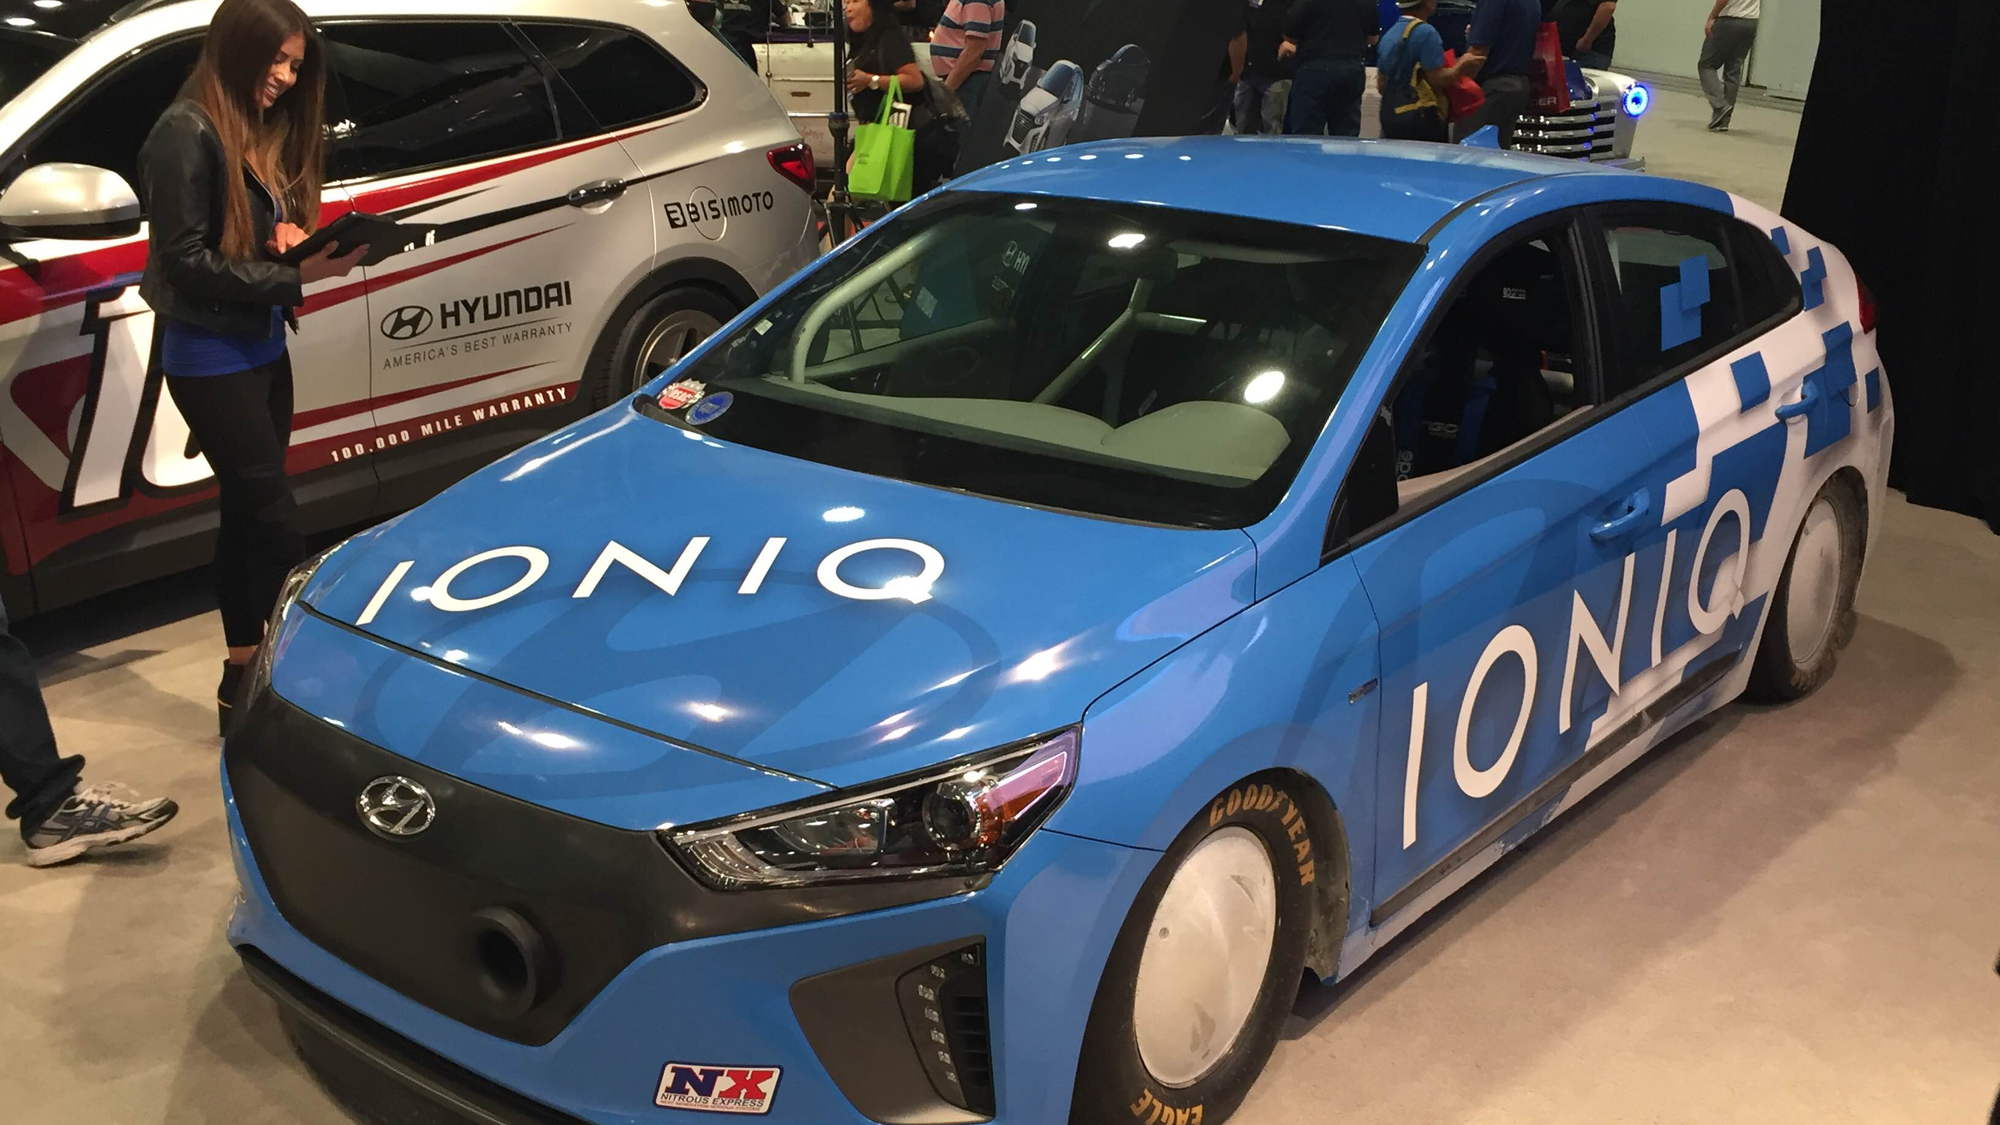 Hyundai Ioniq Hybrid Land Speed Record car, at SEMA 2016